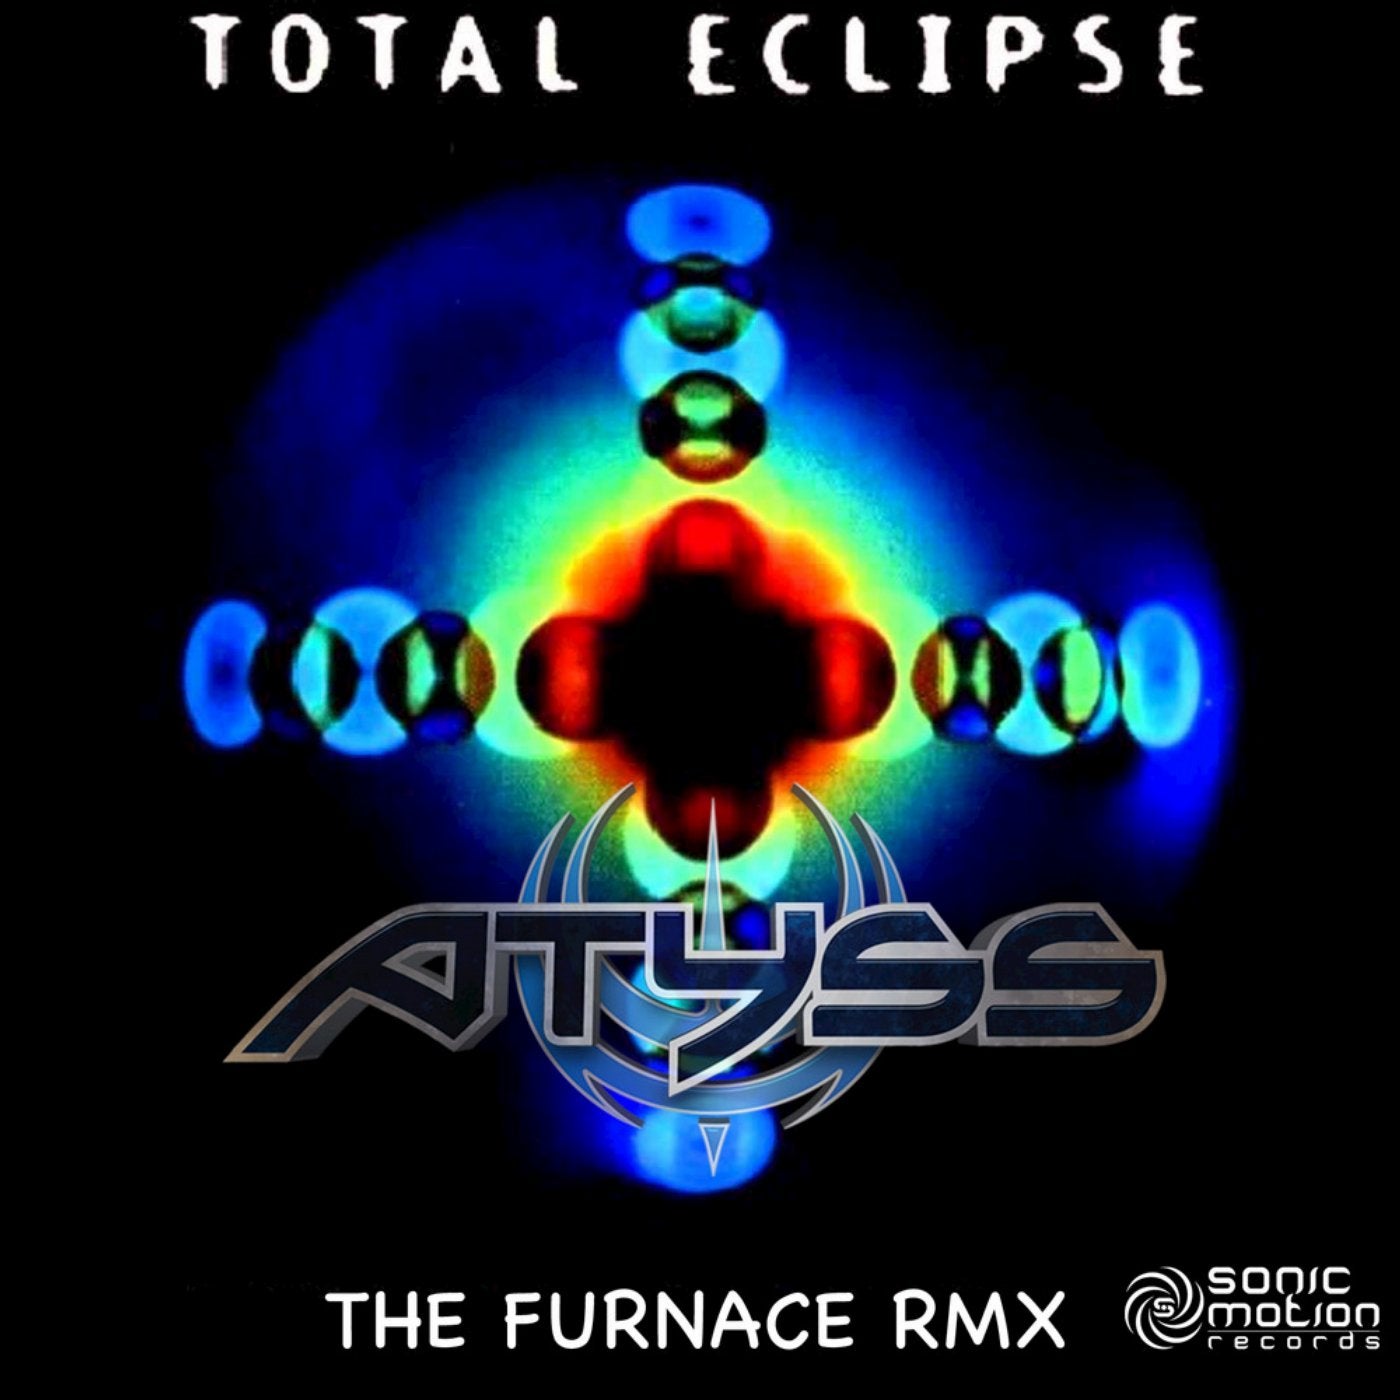 The Furnace: Atyss RMX